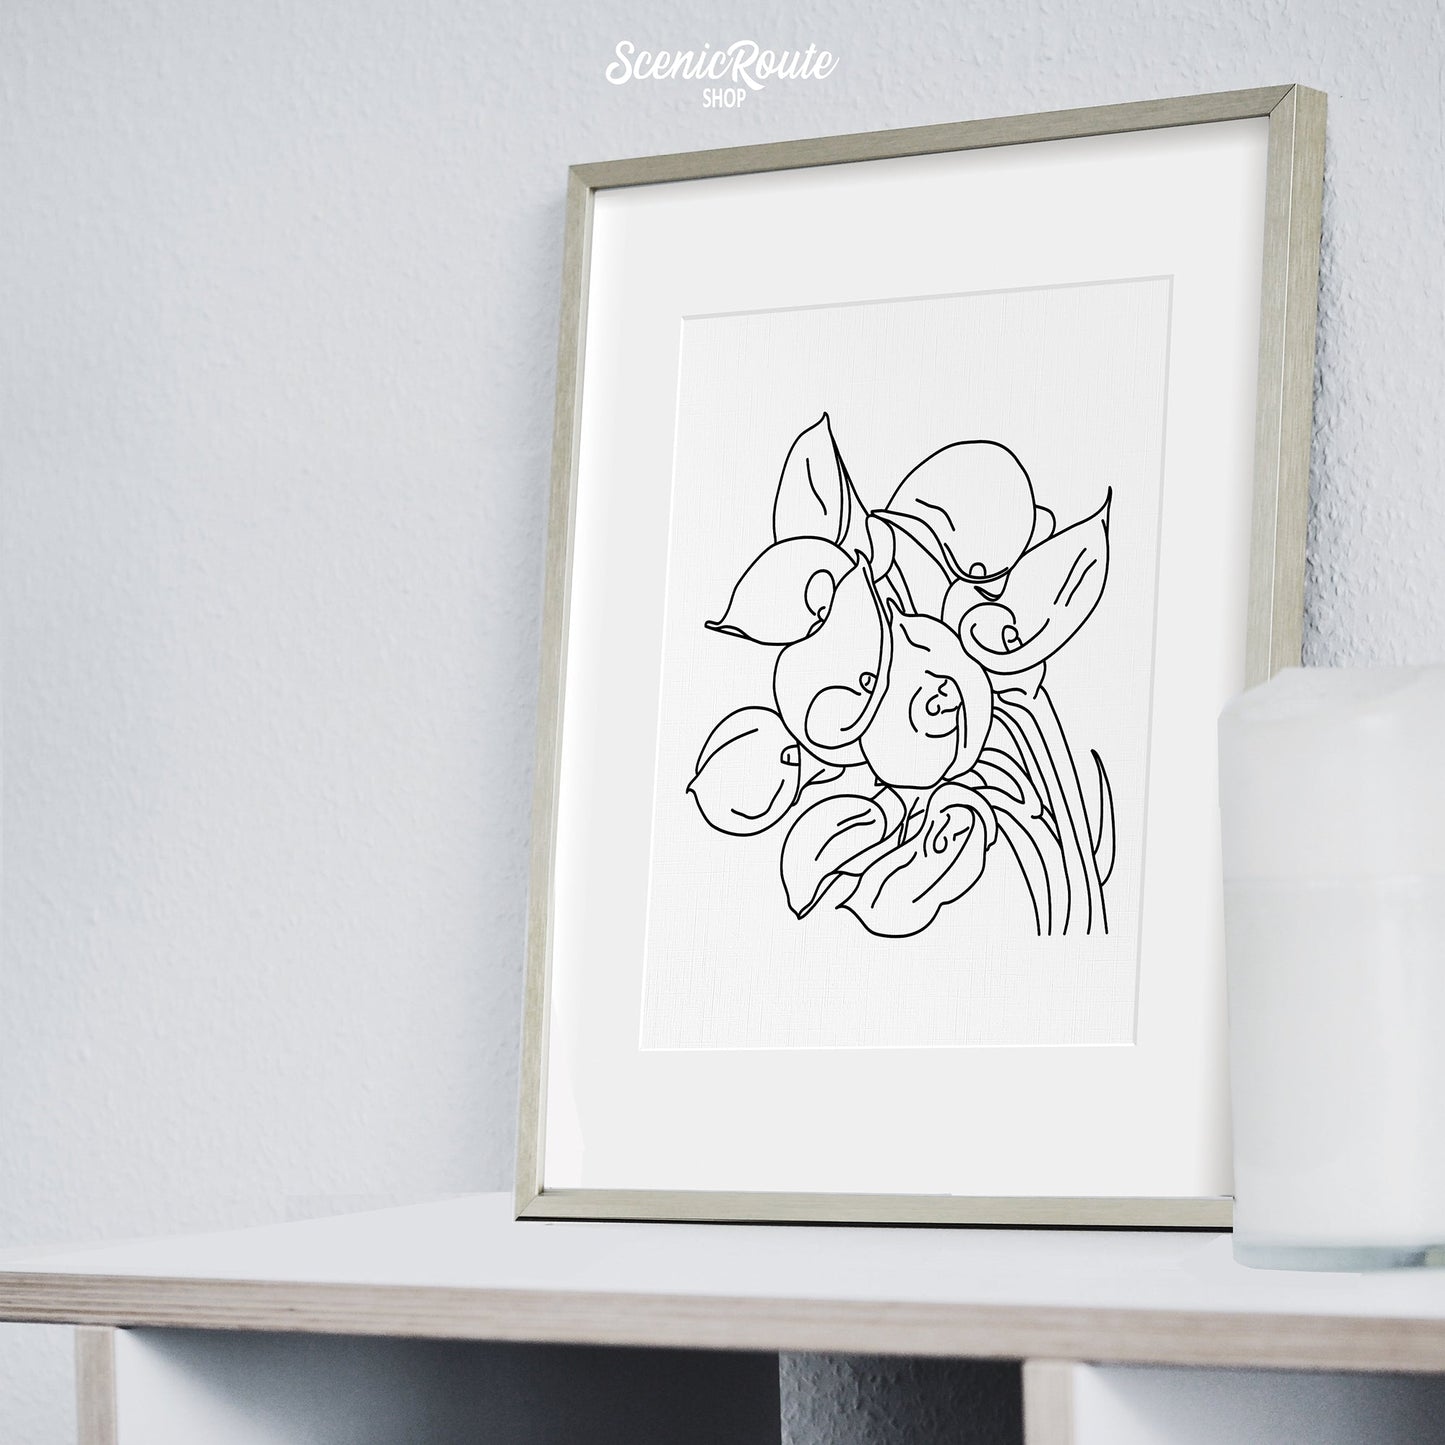 A framed line art drawing of a Calla Lily Flower on a bookshelf